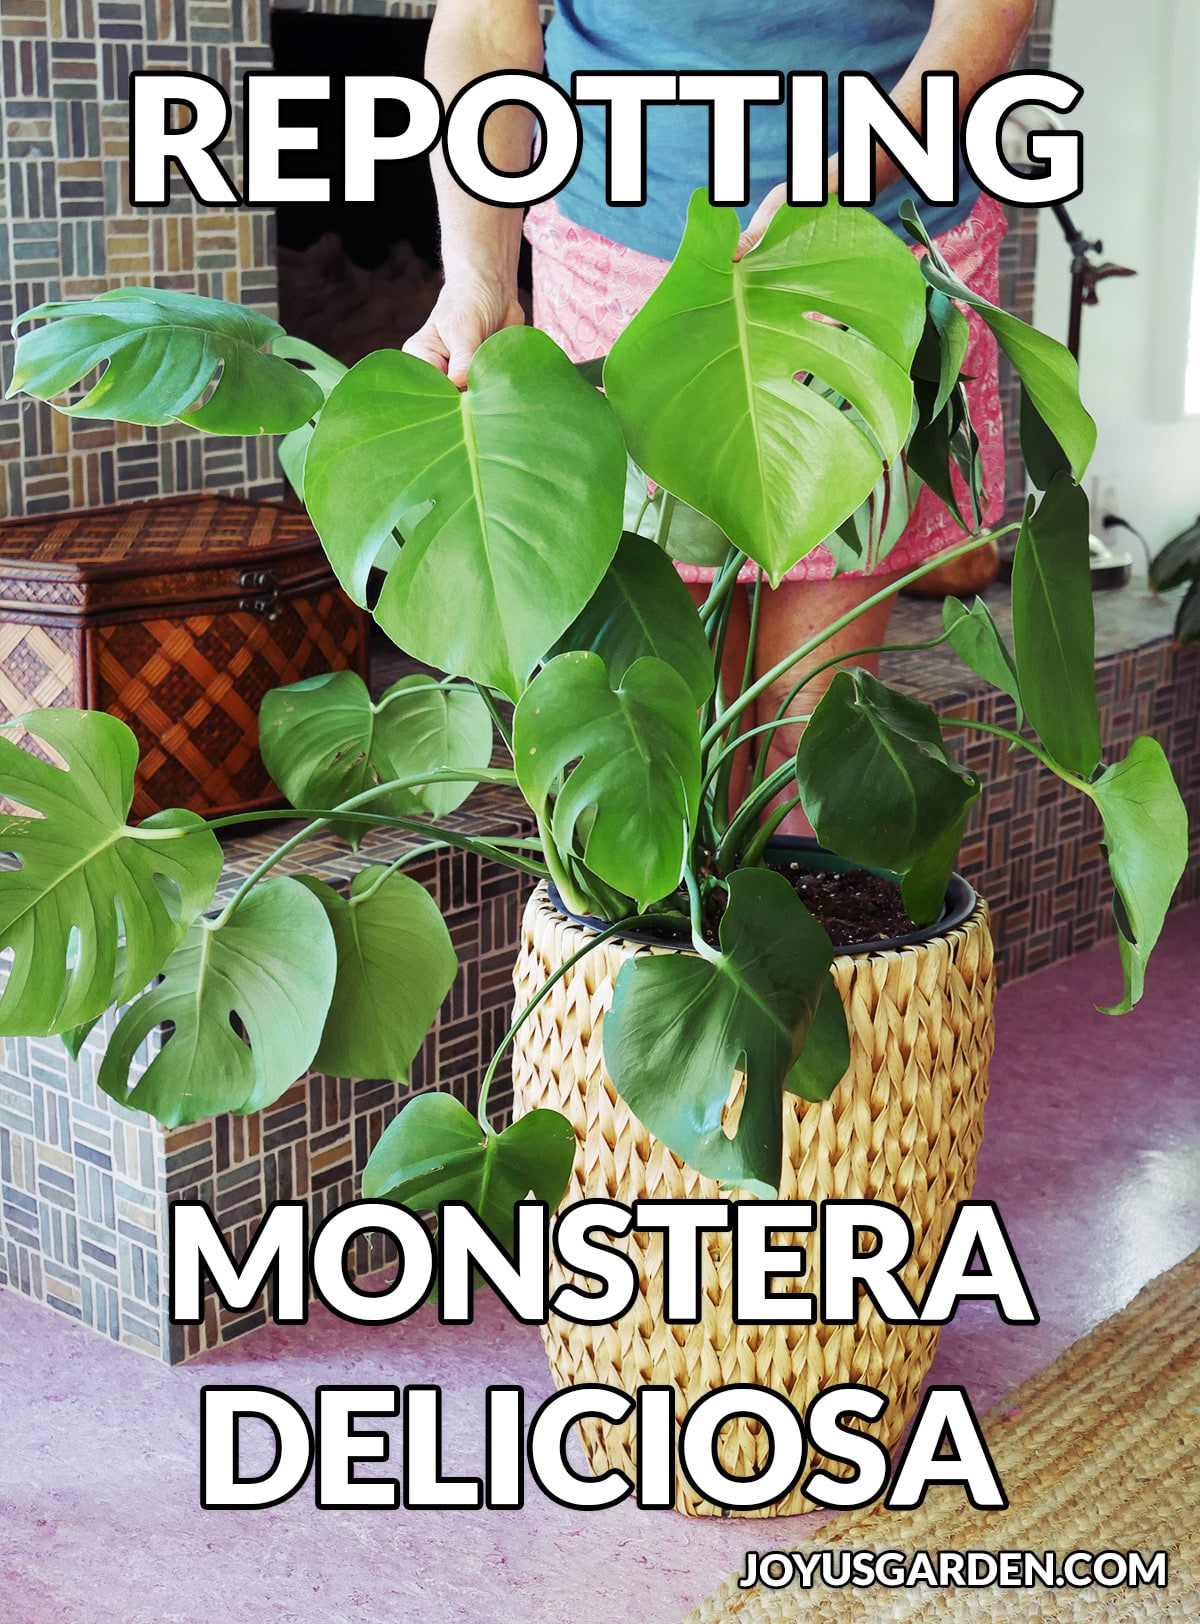  Repotting Monstera Deliciosa: ວິທີການເຮັດມັນ &amp; amp; ການ​ປະ​ສົມ​ການ​ນໍາ​ໃຊ້​